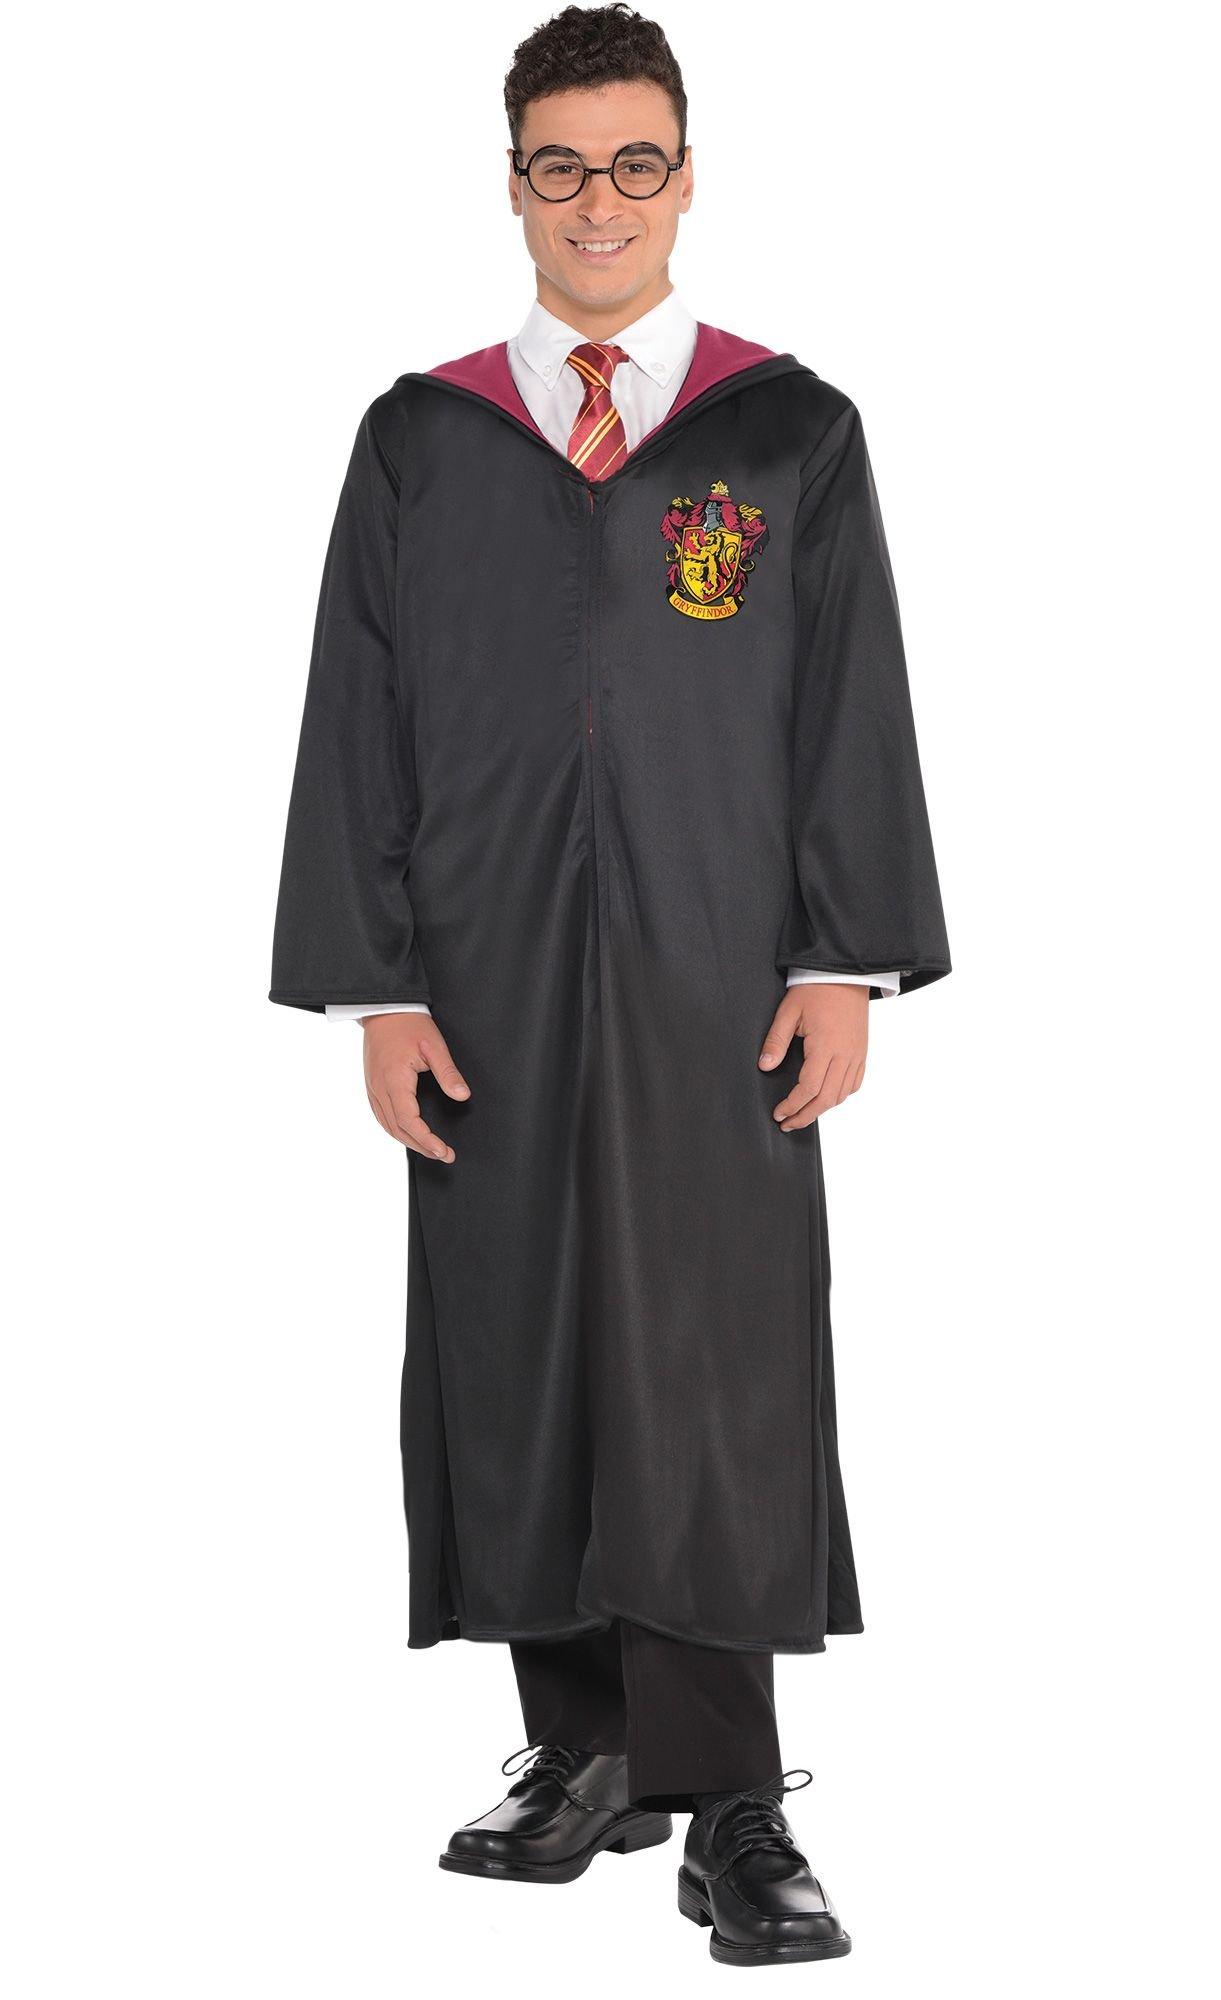 Gryffindor Robe - Harry Potter